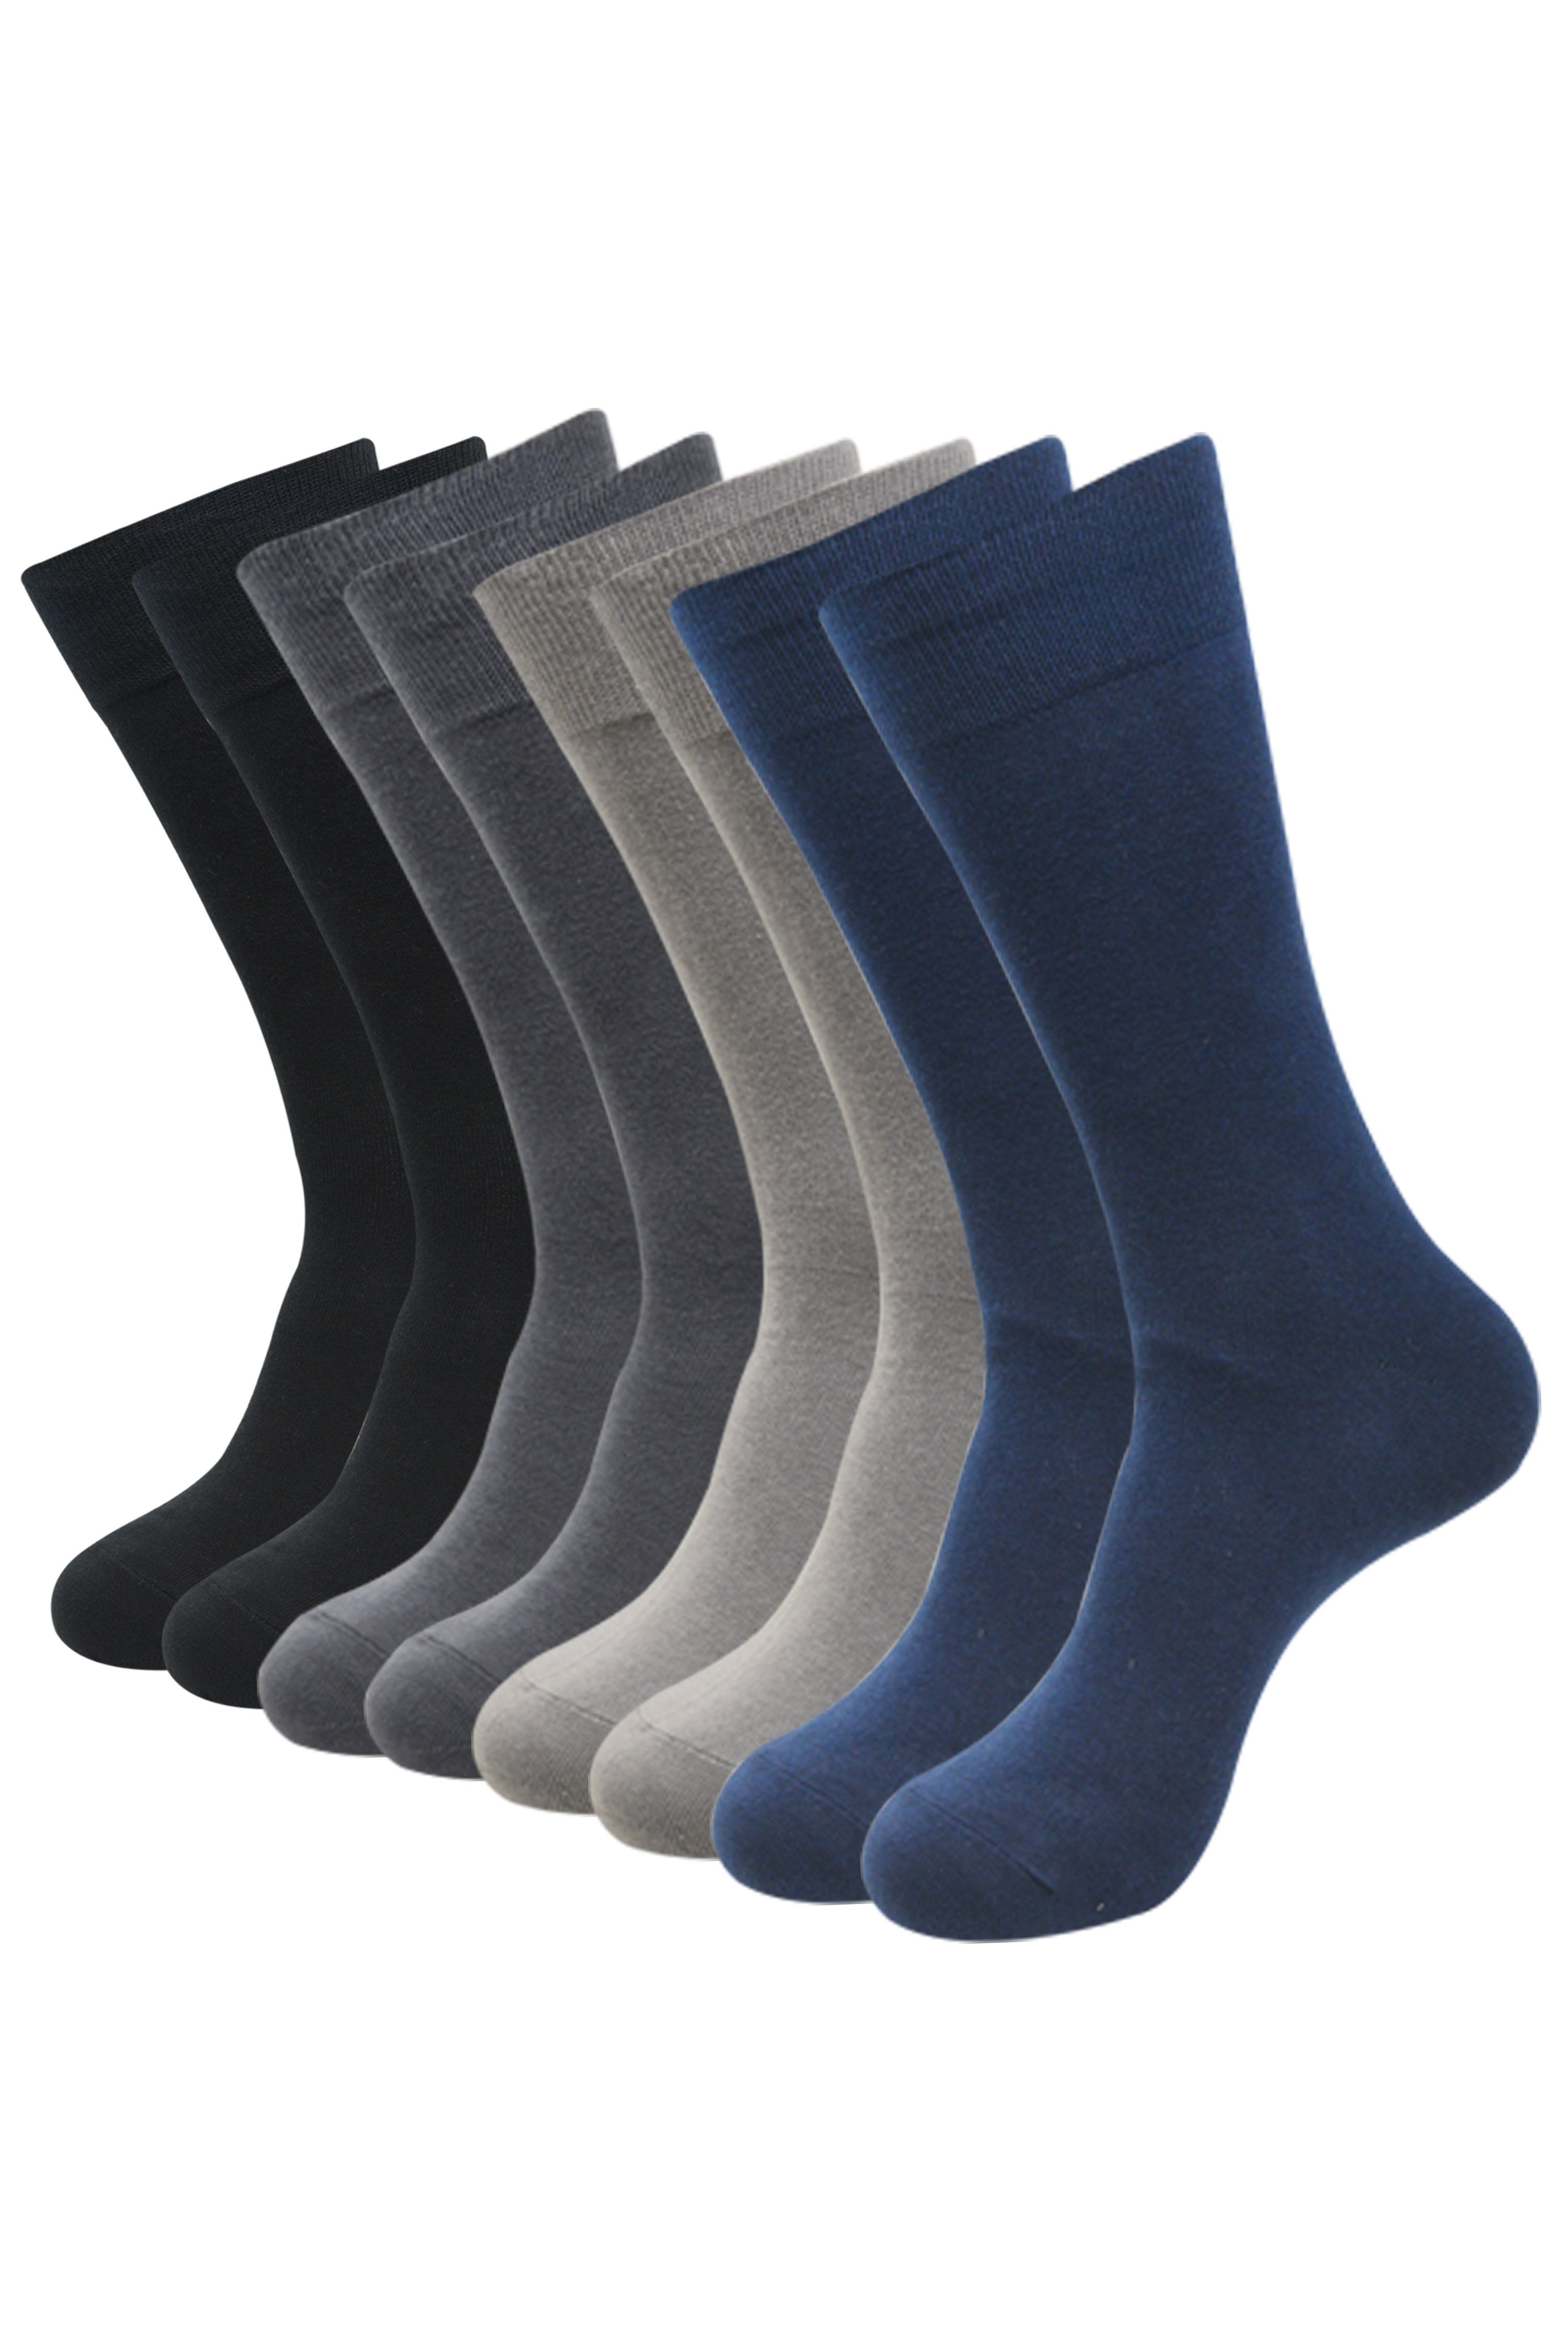 Balenzia - Cotton Men's Solid Multicolor Full Length Socks ( Pack of 4 )